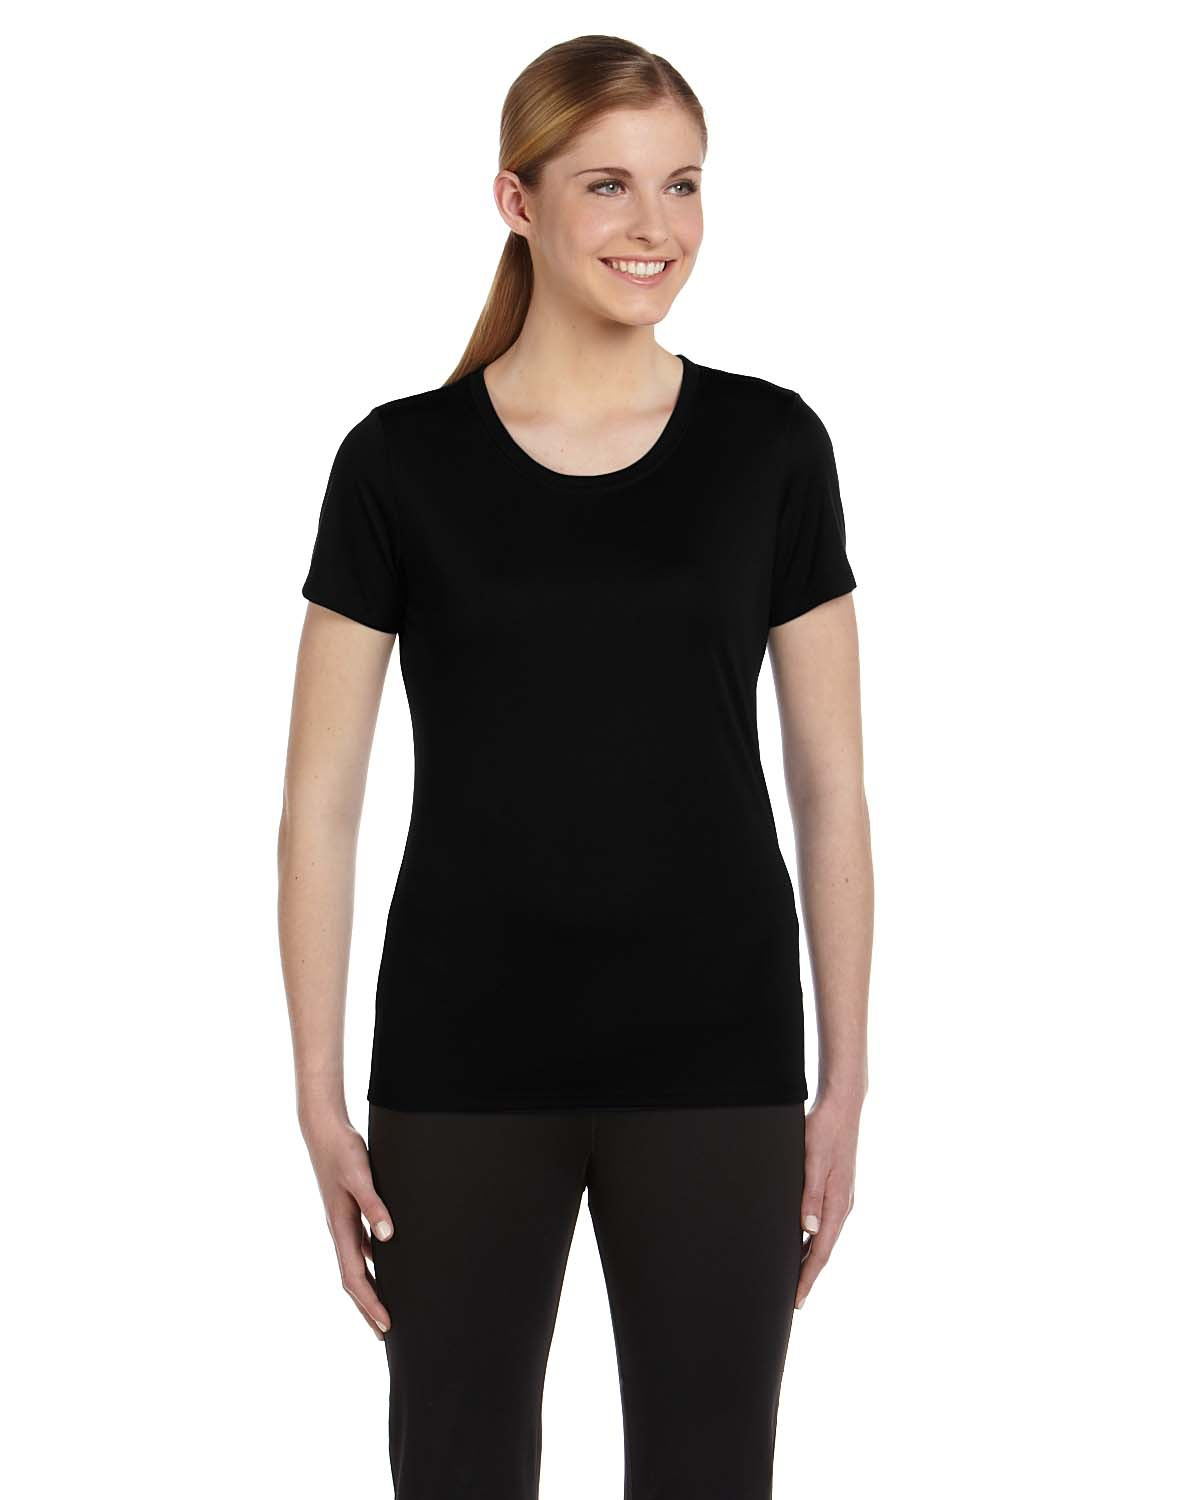 alo - Ladies' Polyester T-Shirt $6.67 - Women's T-Shirts